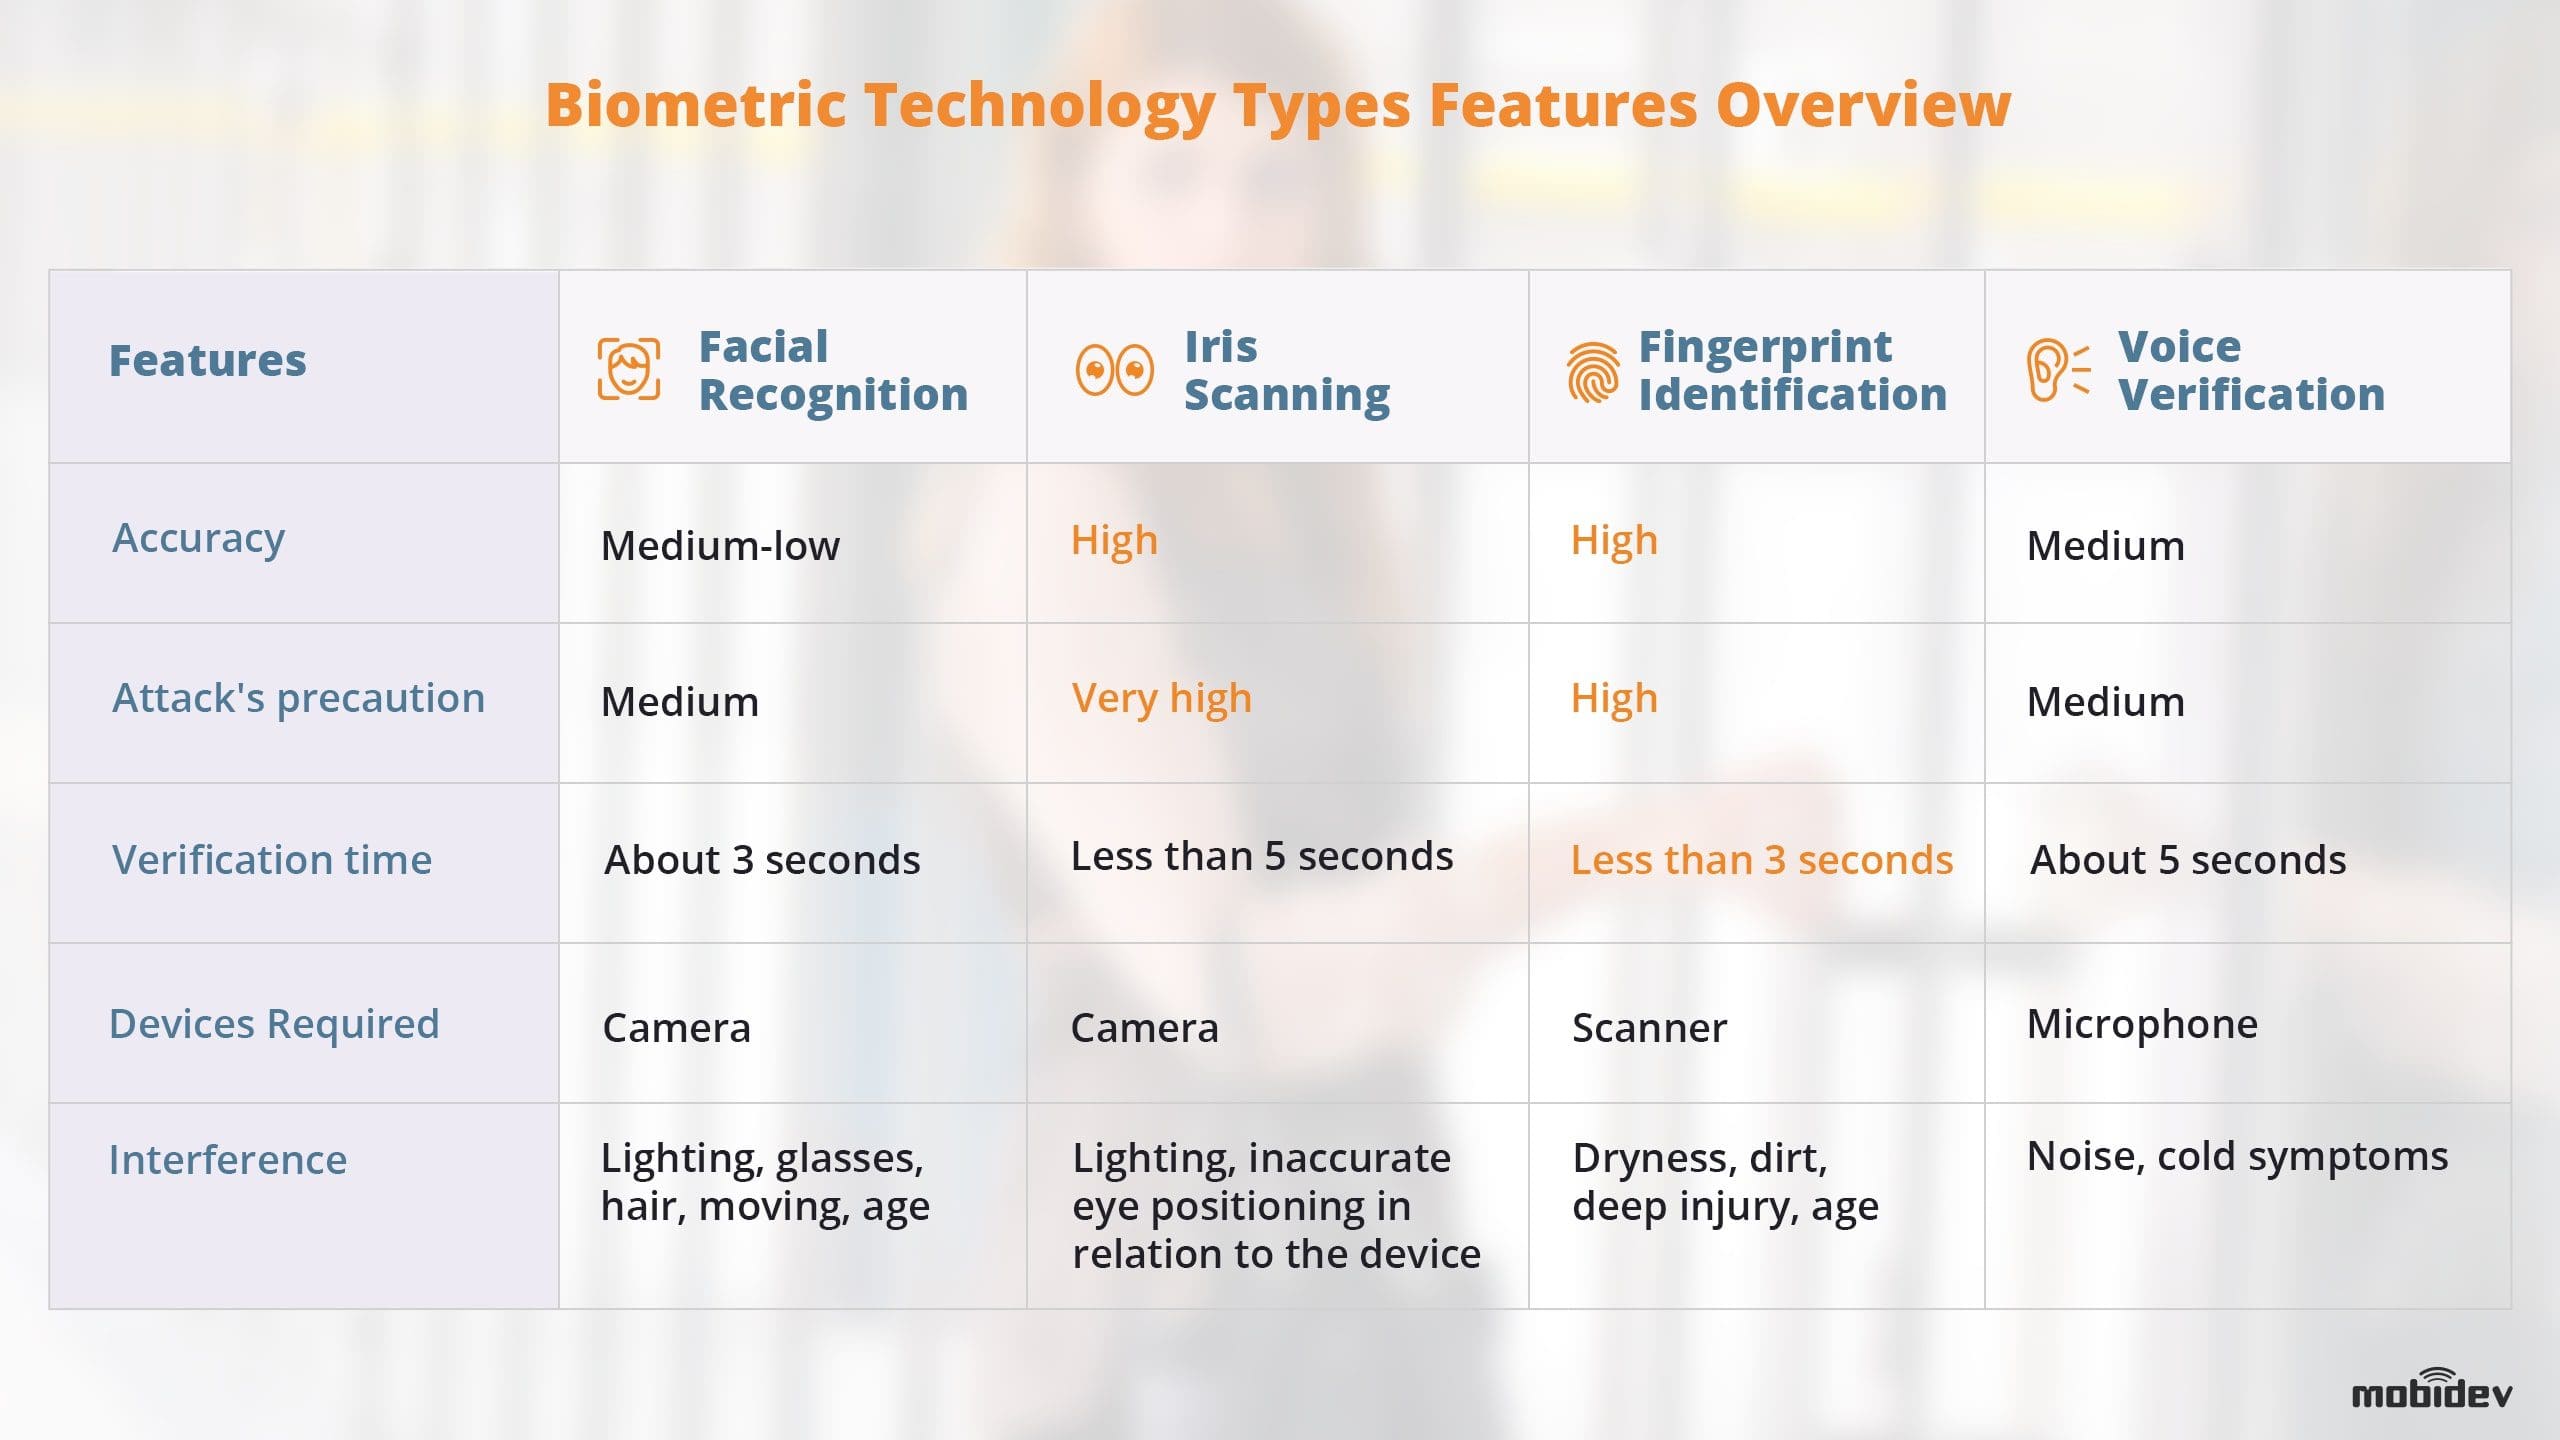 Characteristics of biometric technology types